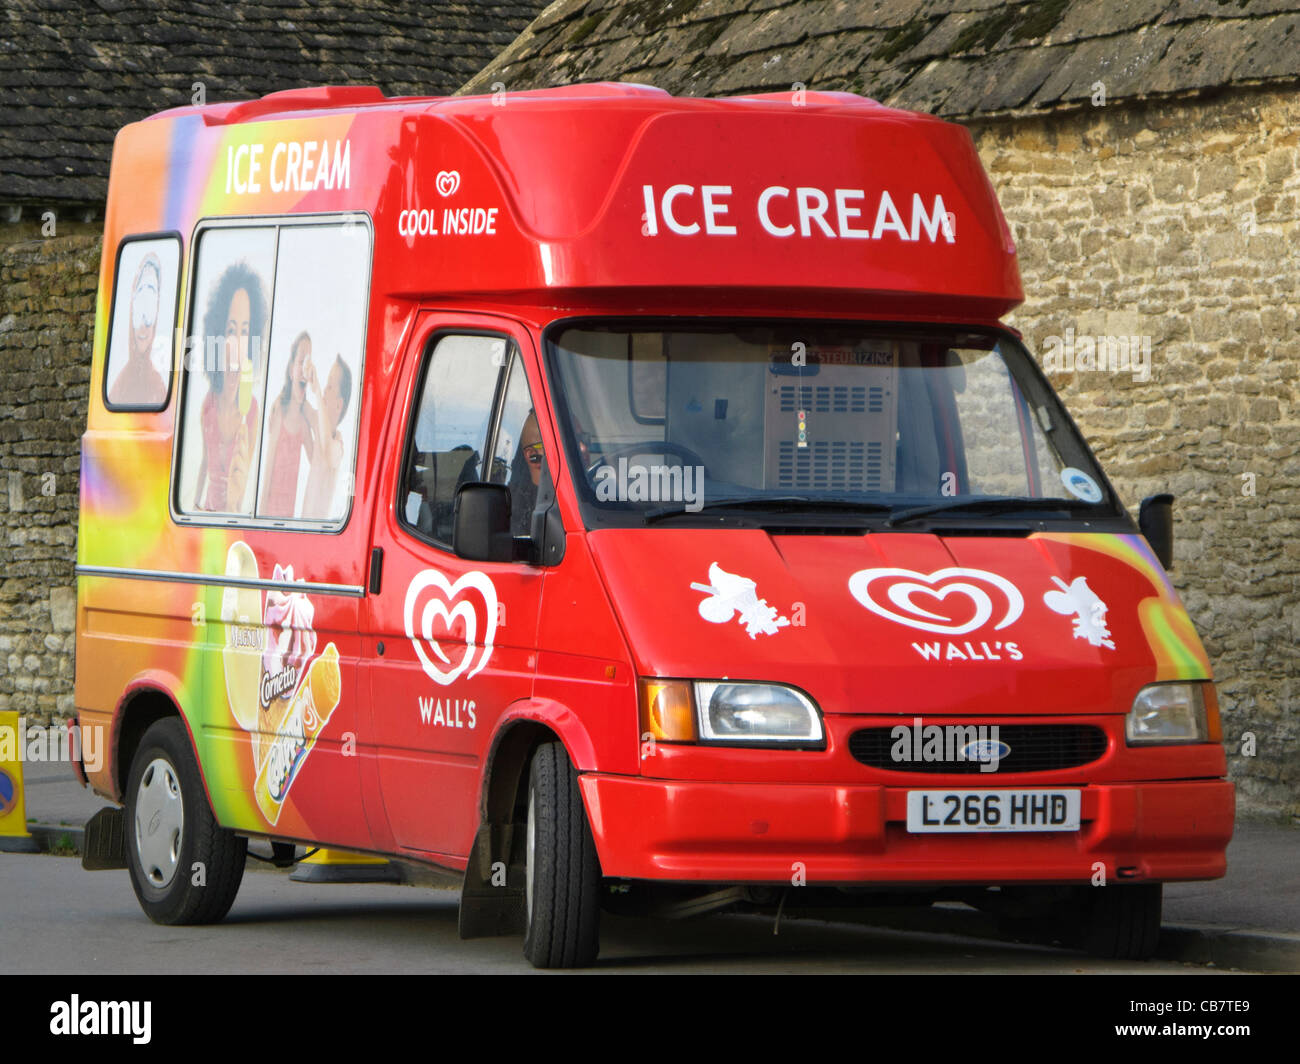 Ice cream van parked on a street in England, UK Stock Photo